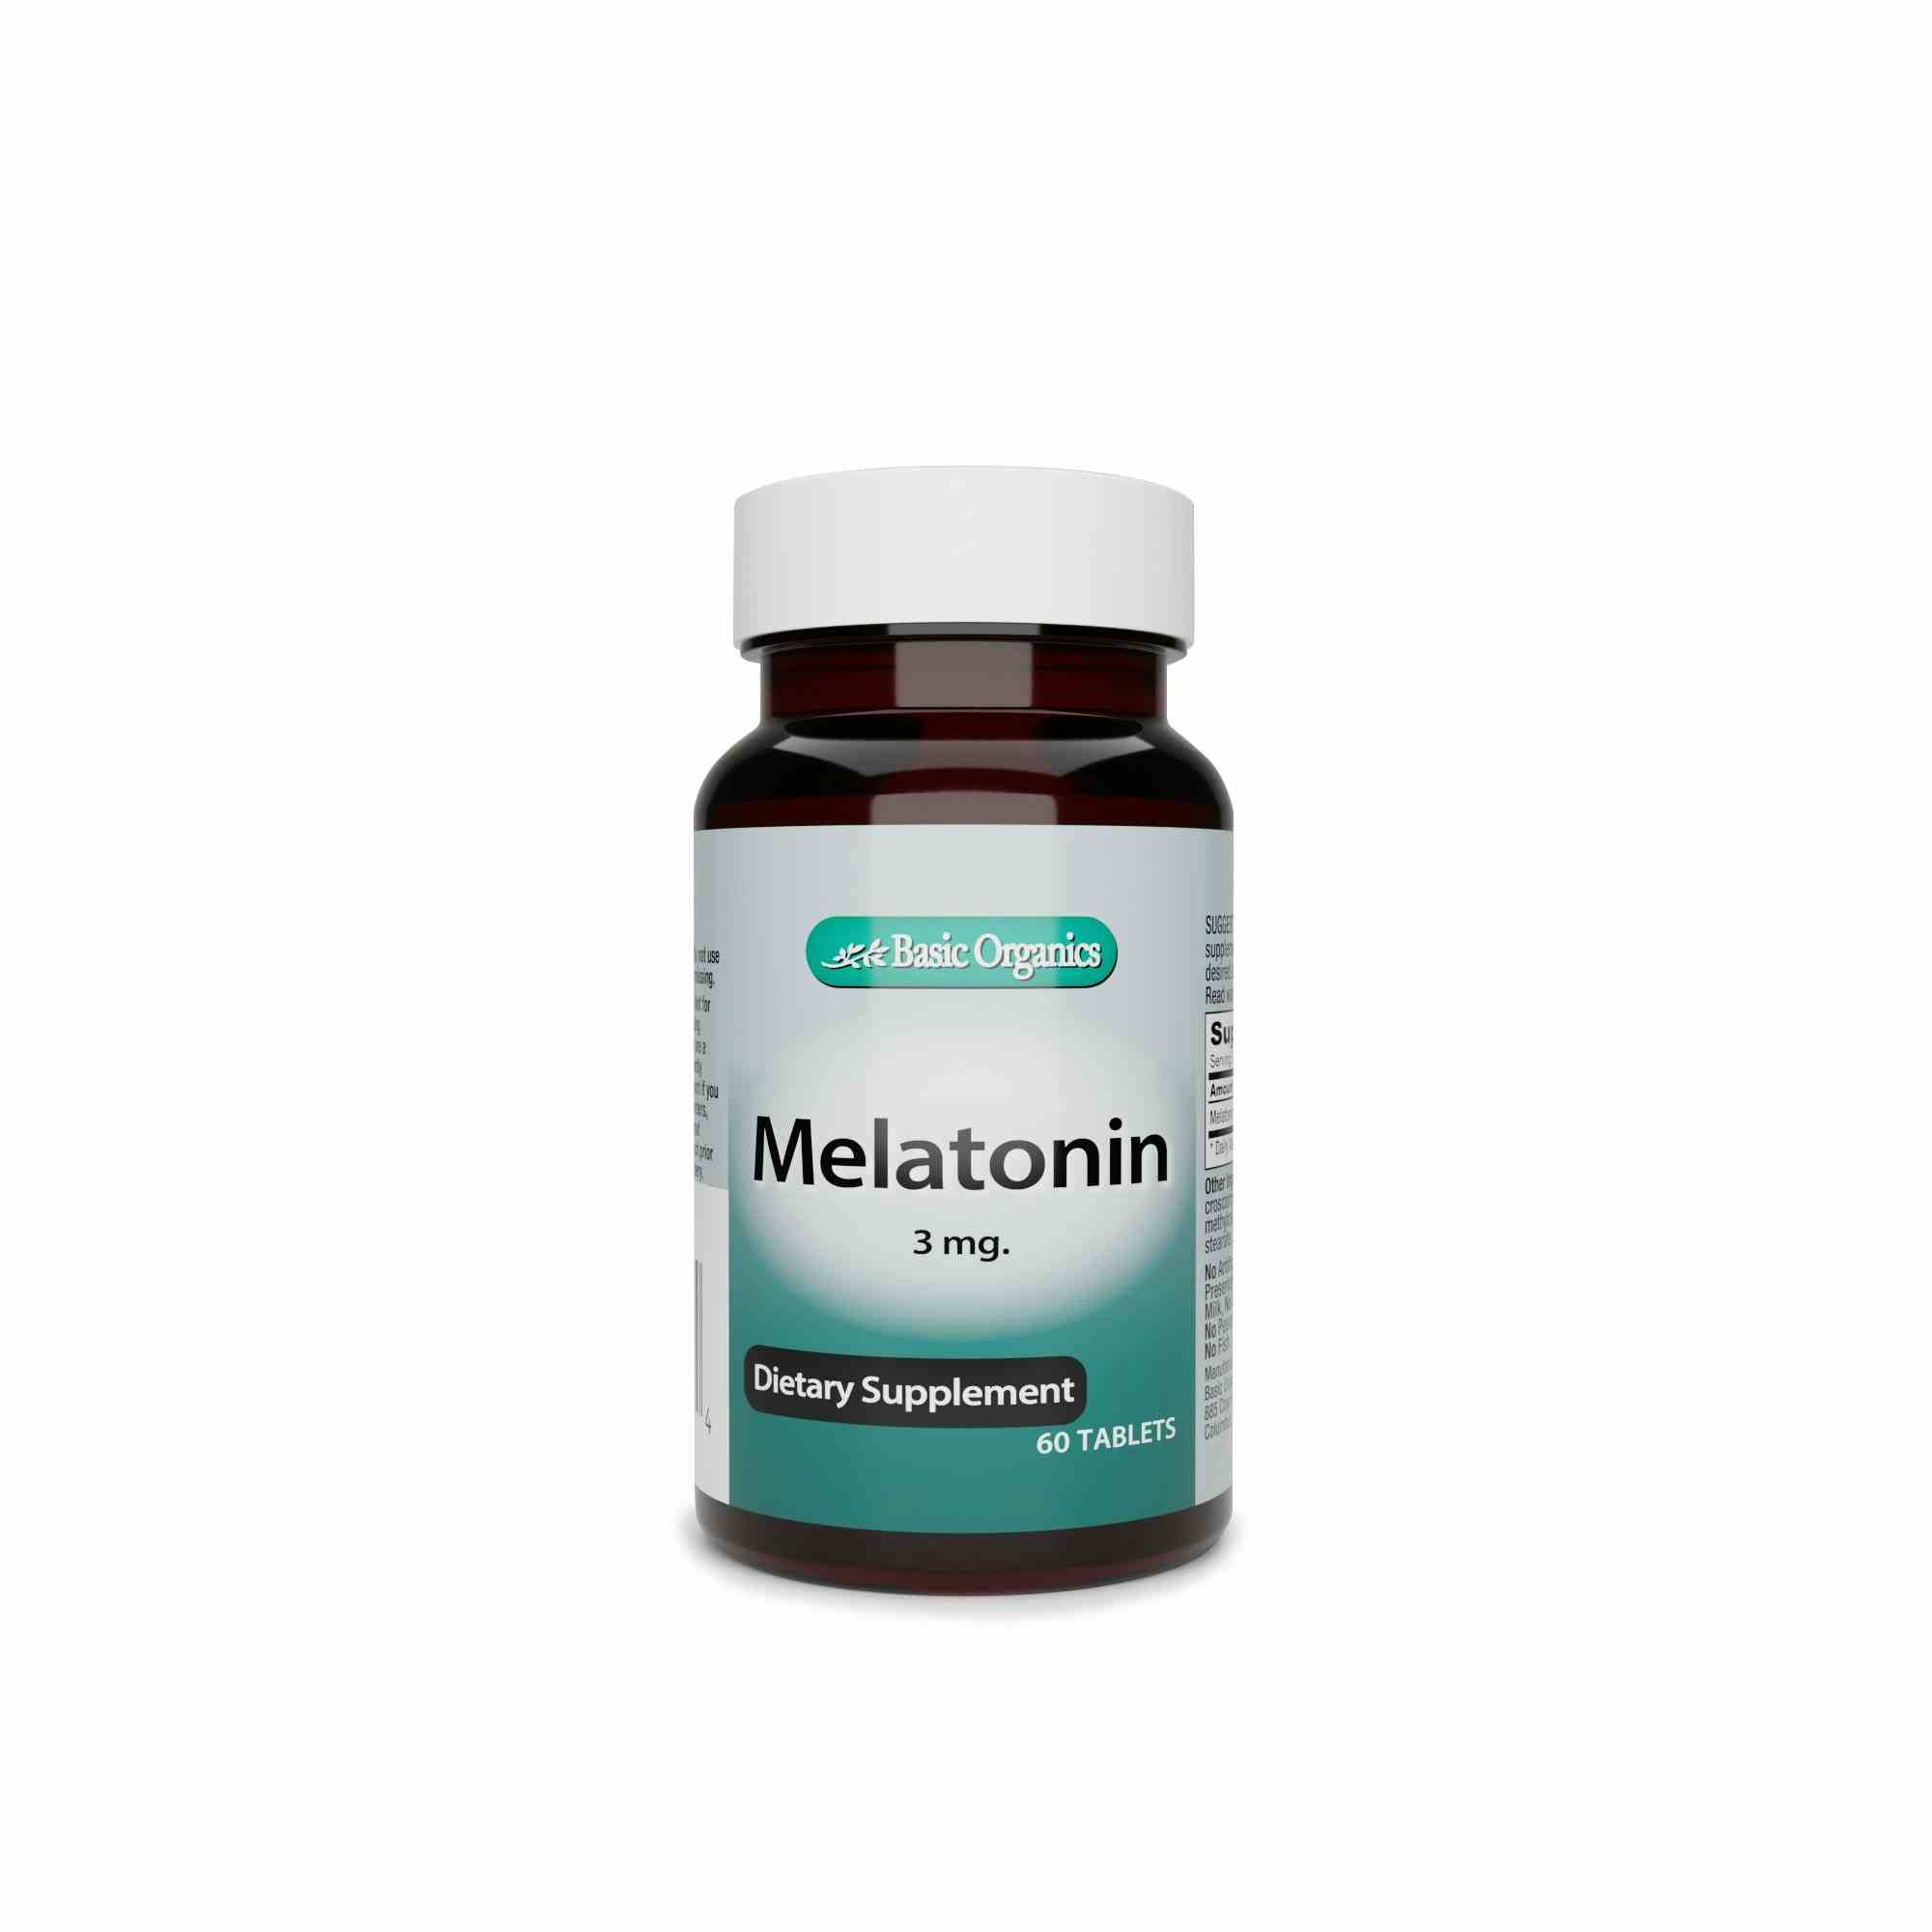 Basic Organics Melatonin, 3 mg., 60 Tablets, 05445821360, 1 Bottle